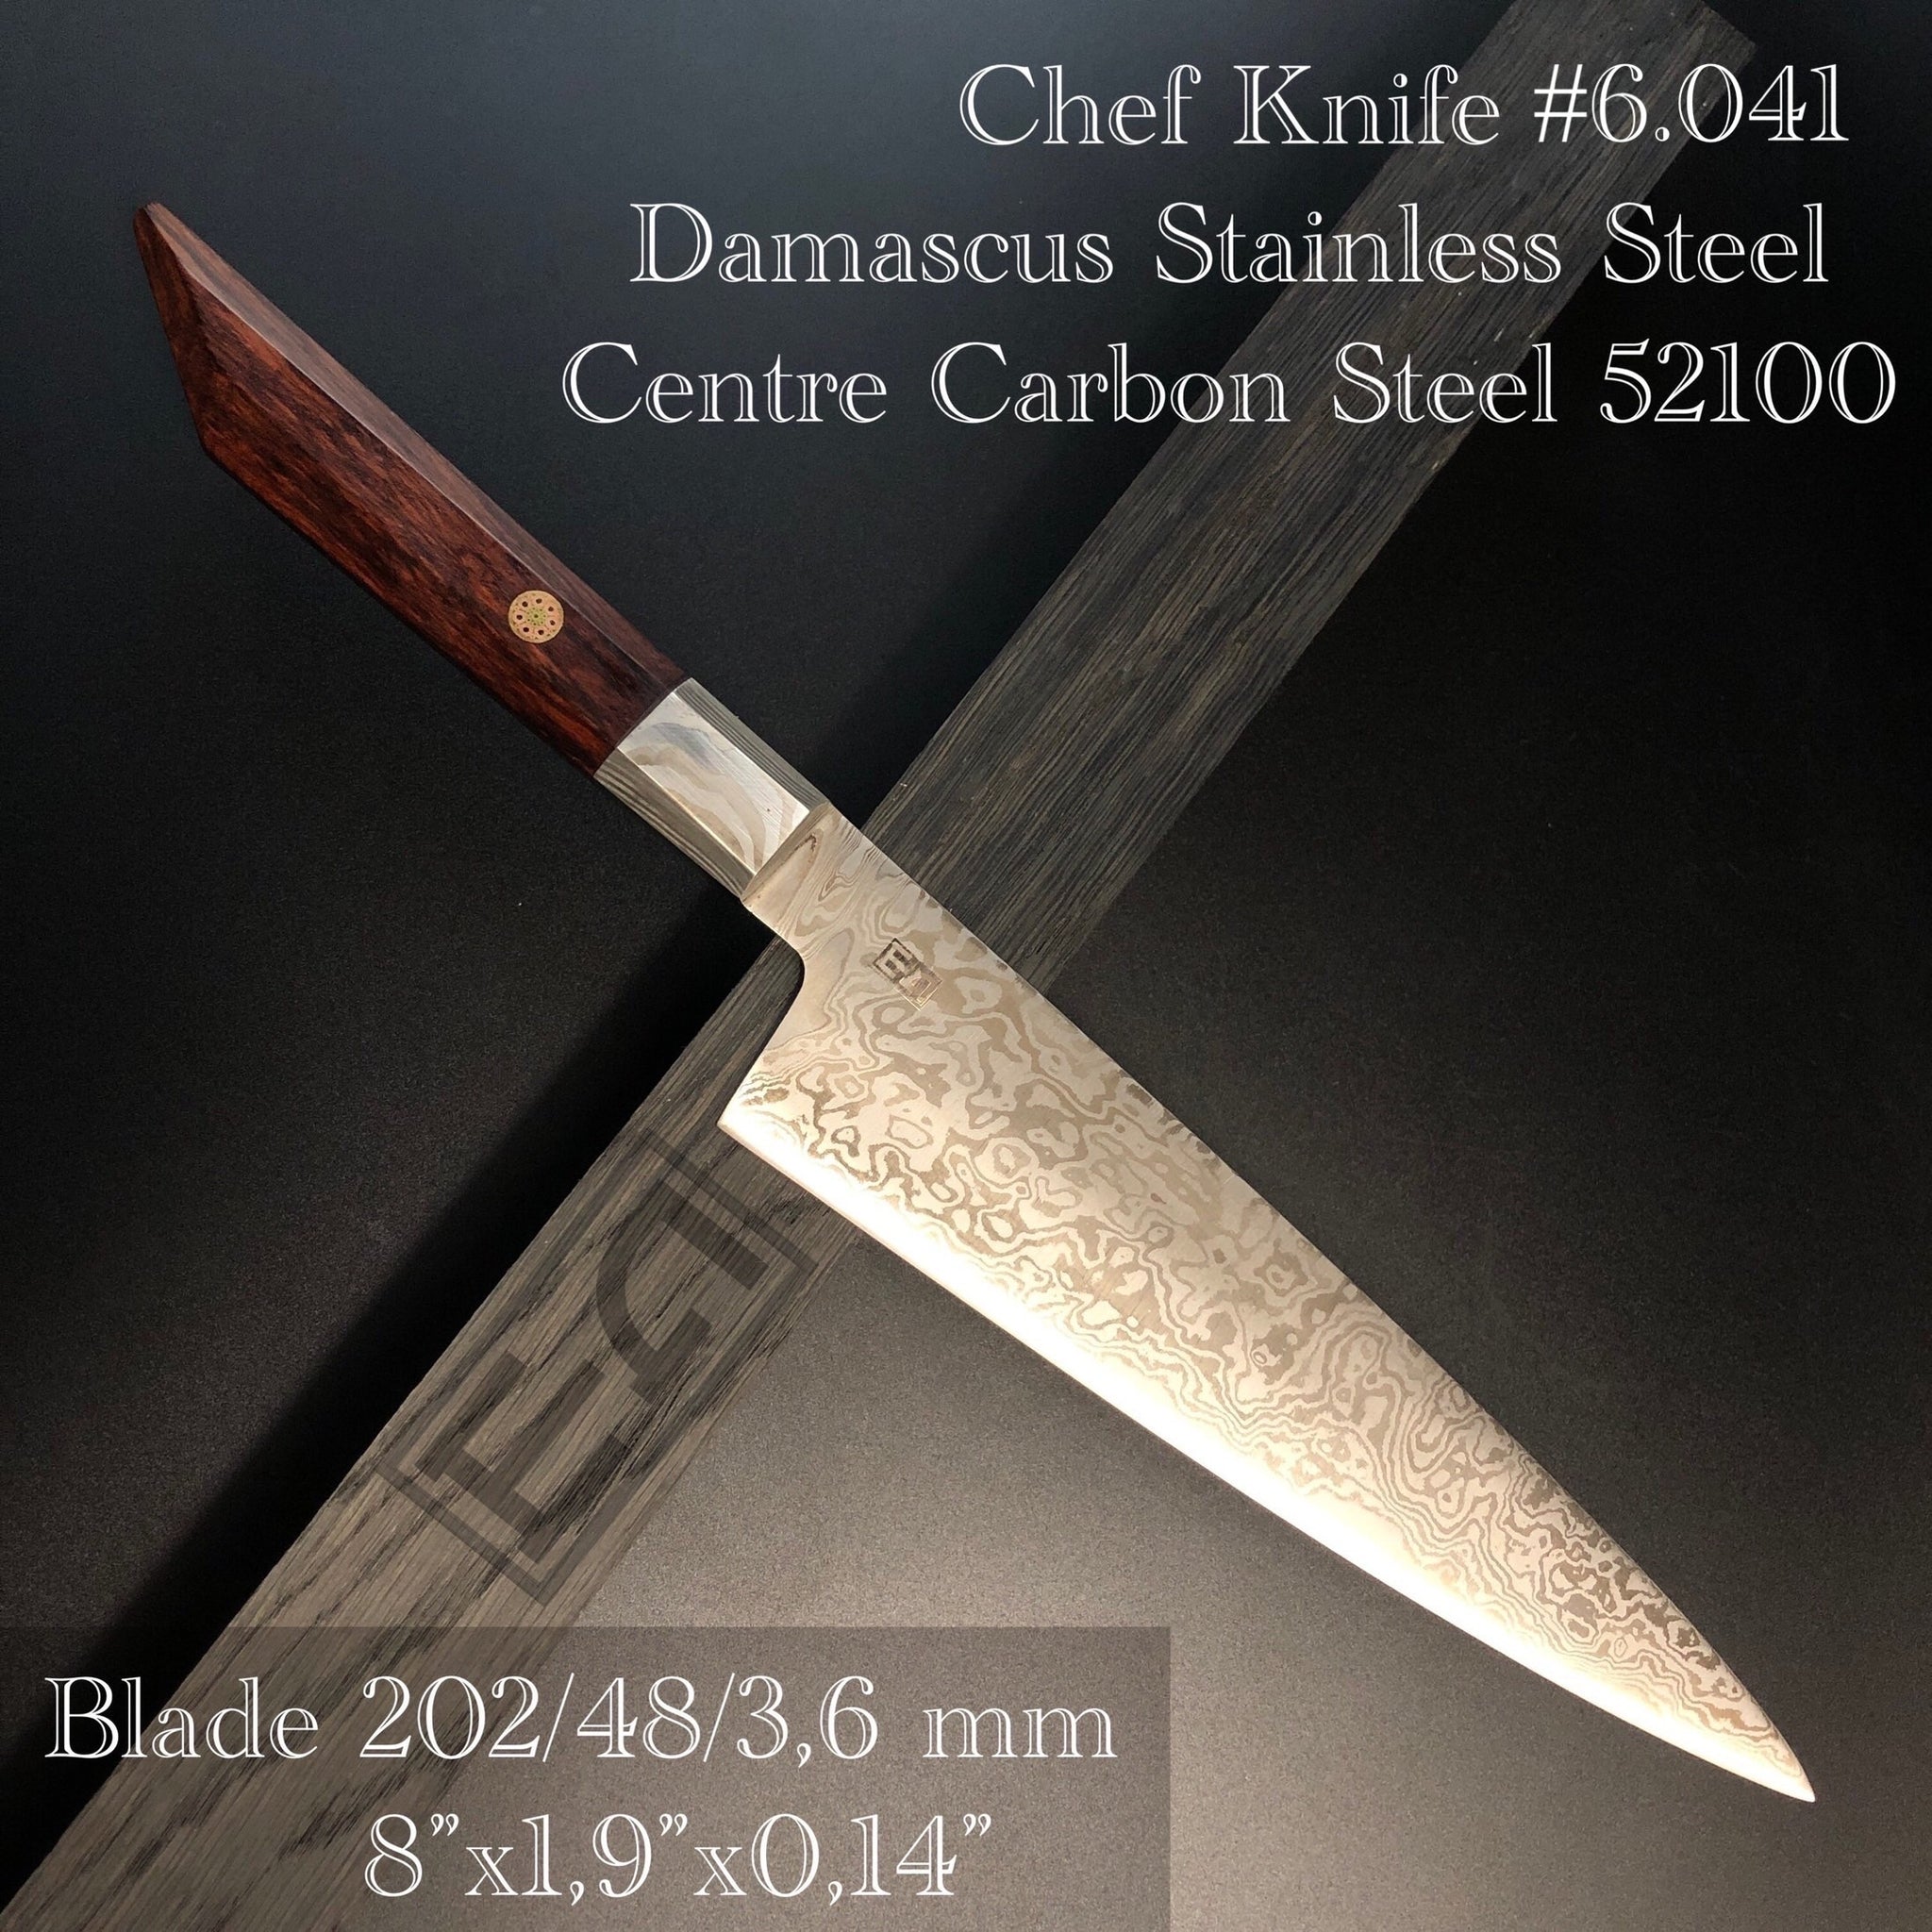 8 DAMASCUS PROFESSIONAL CHEF KNIFE (HAMMERED FINISH) – KANKA Grill